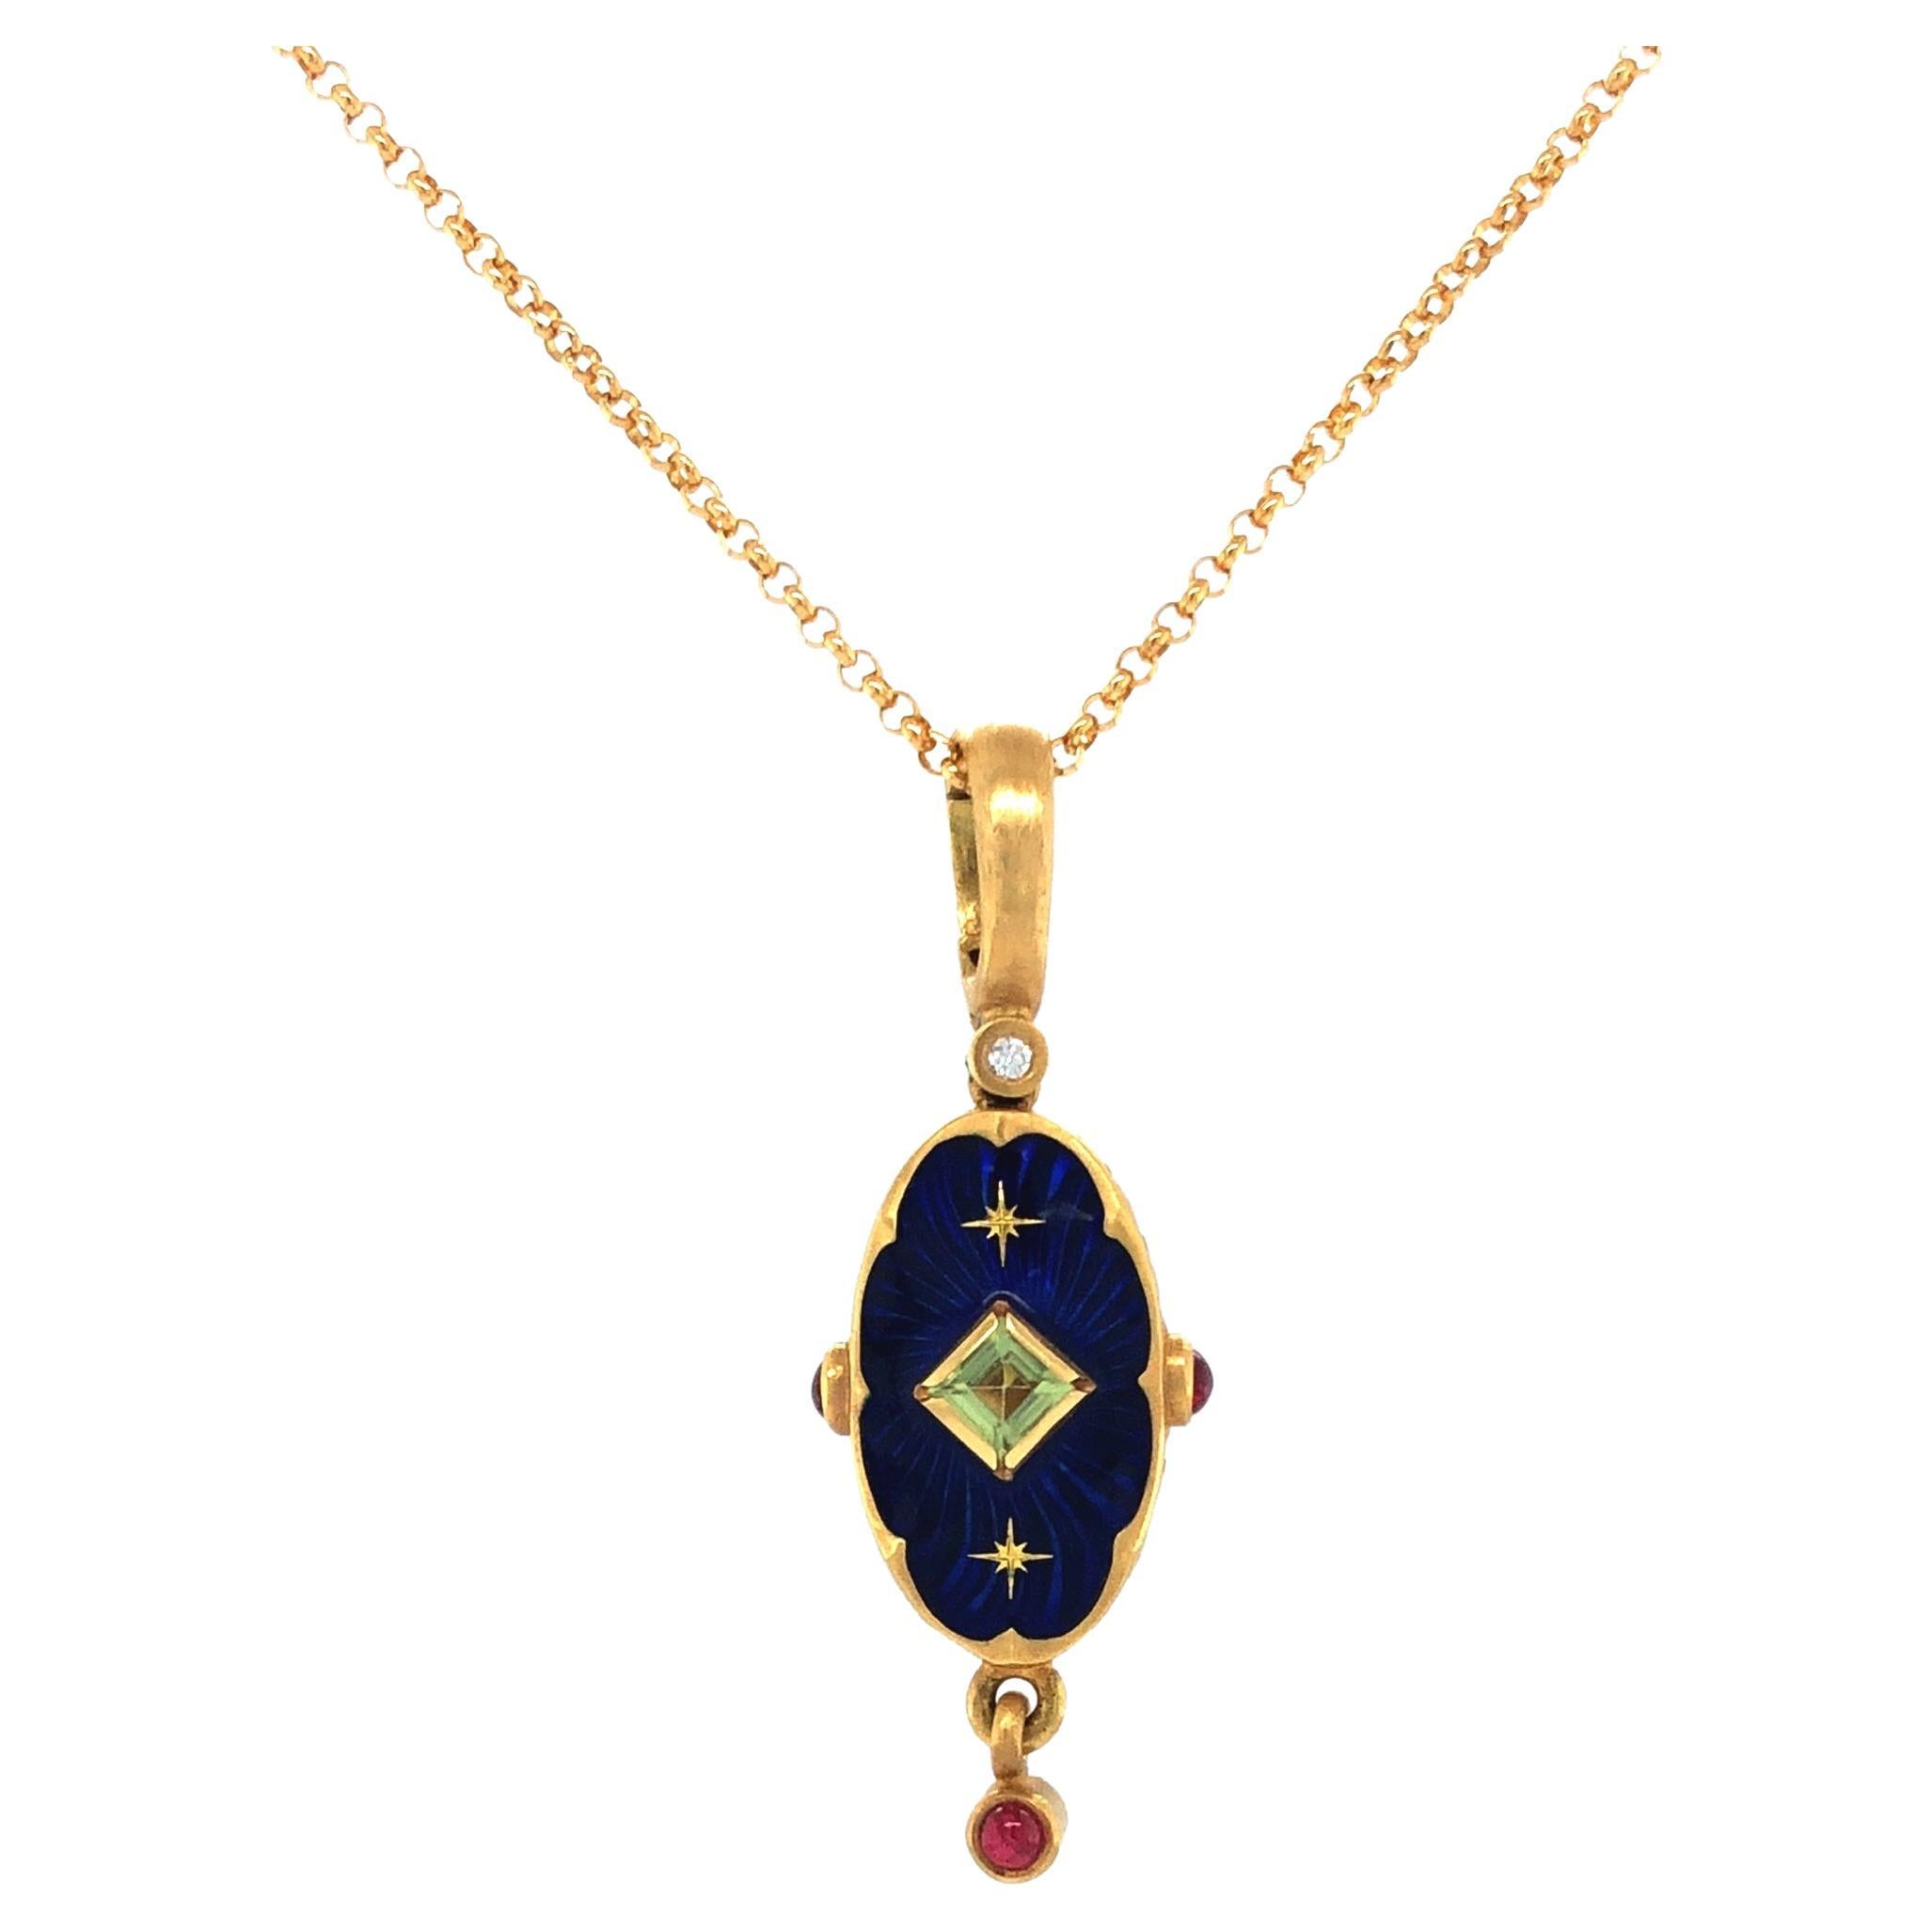 Oval Pendant Necklace - 18k Yellow Gold - Blue Enamel 1 Peridot 3 Rubies 2 Stars